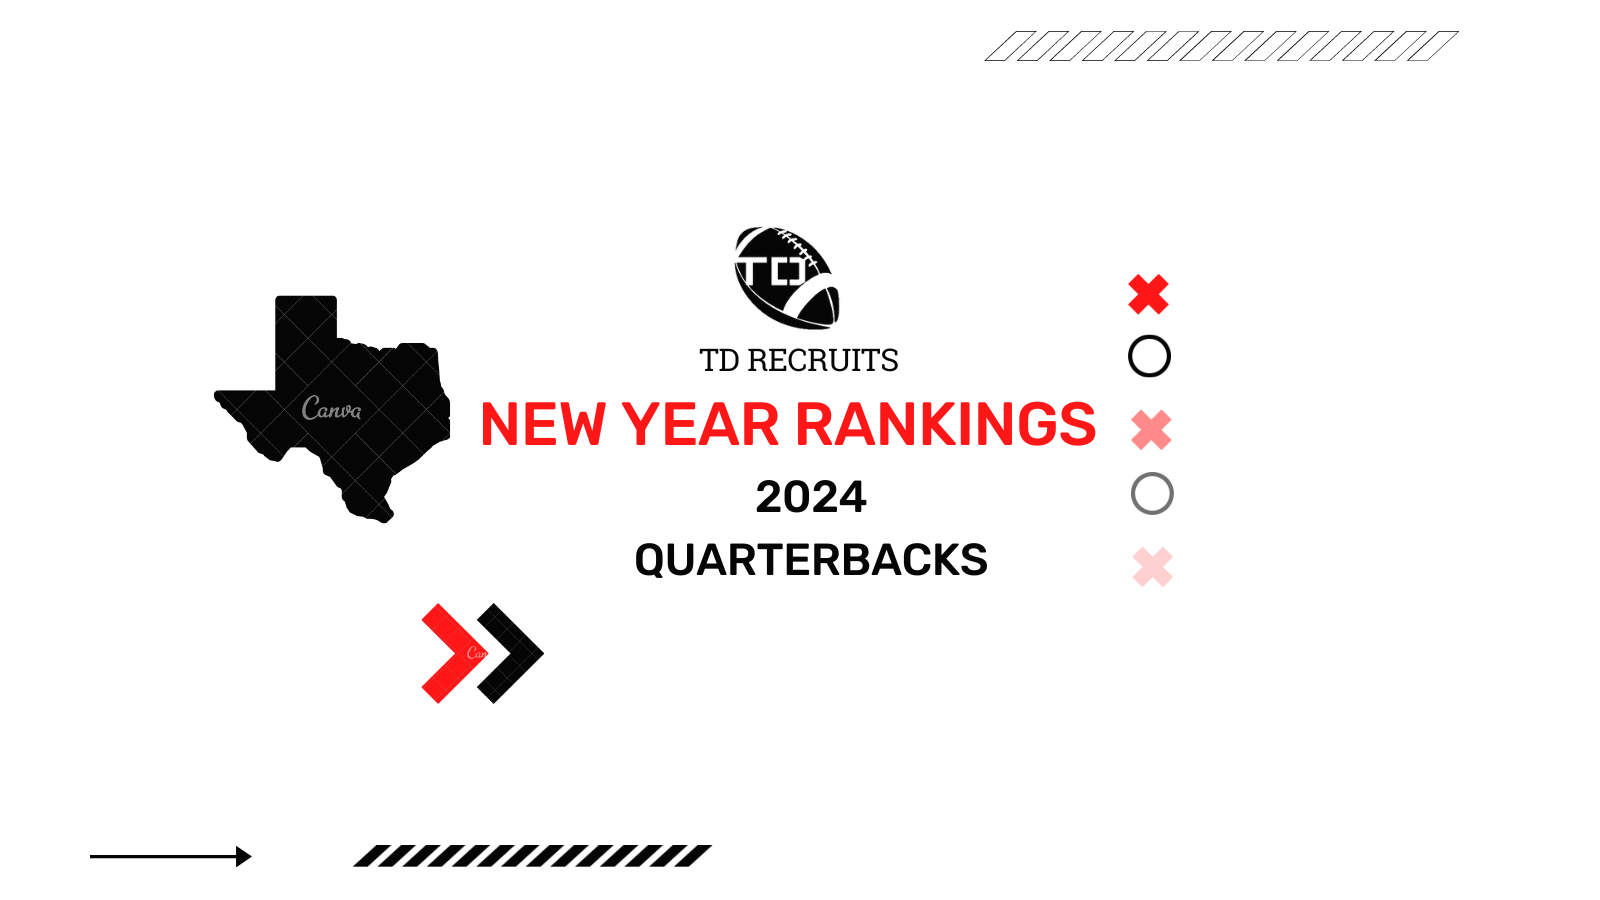 2023 New Year Rankings 2024 Quarterbacks tdrecruits